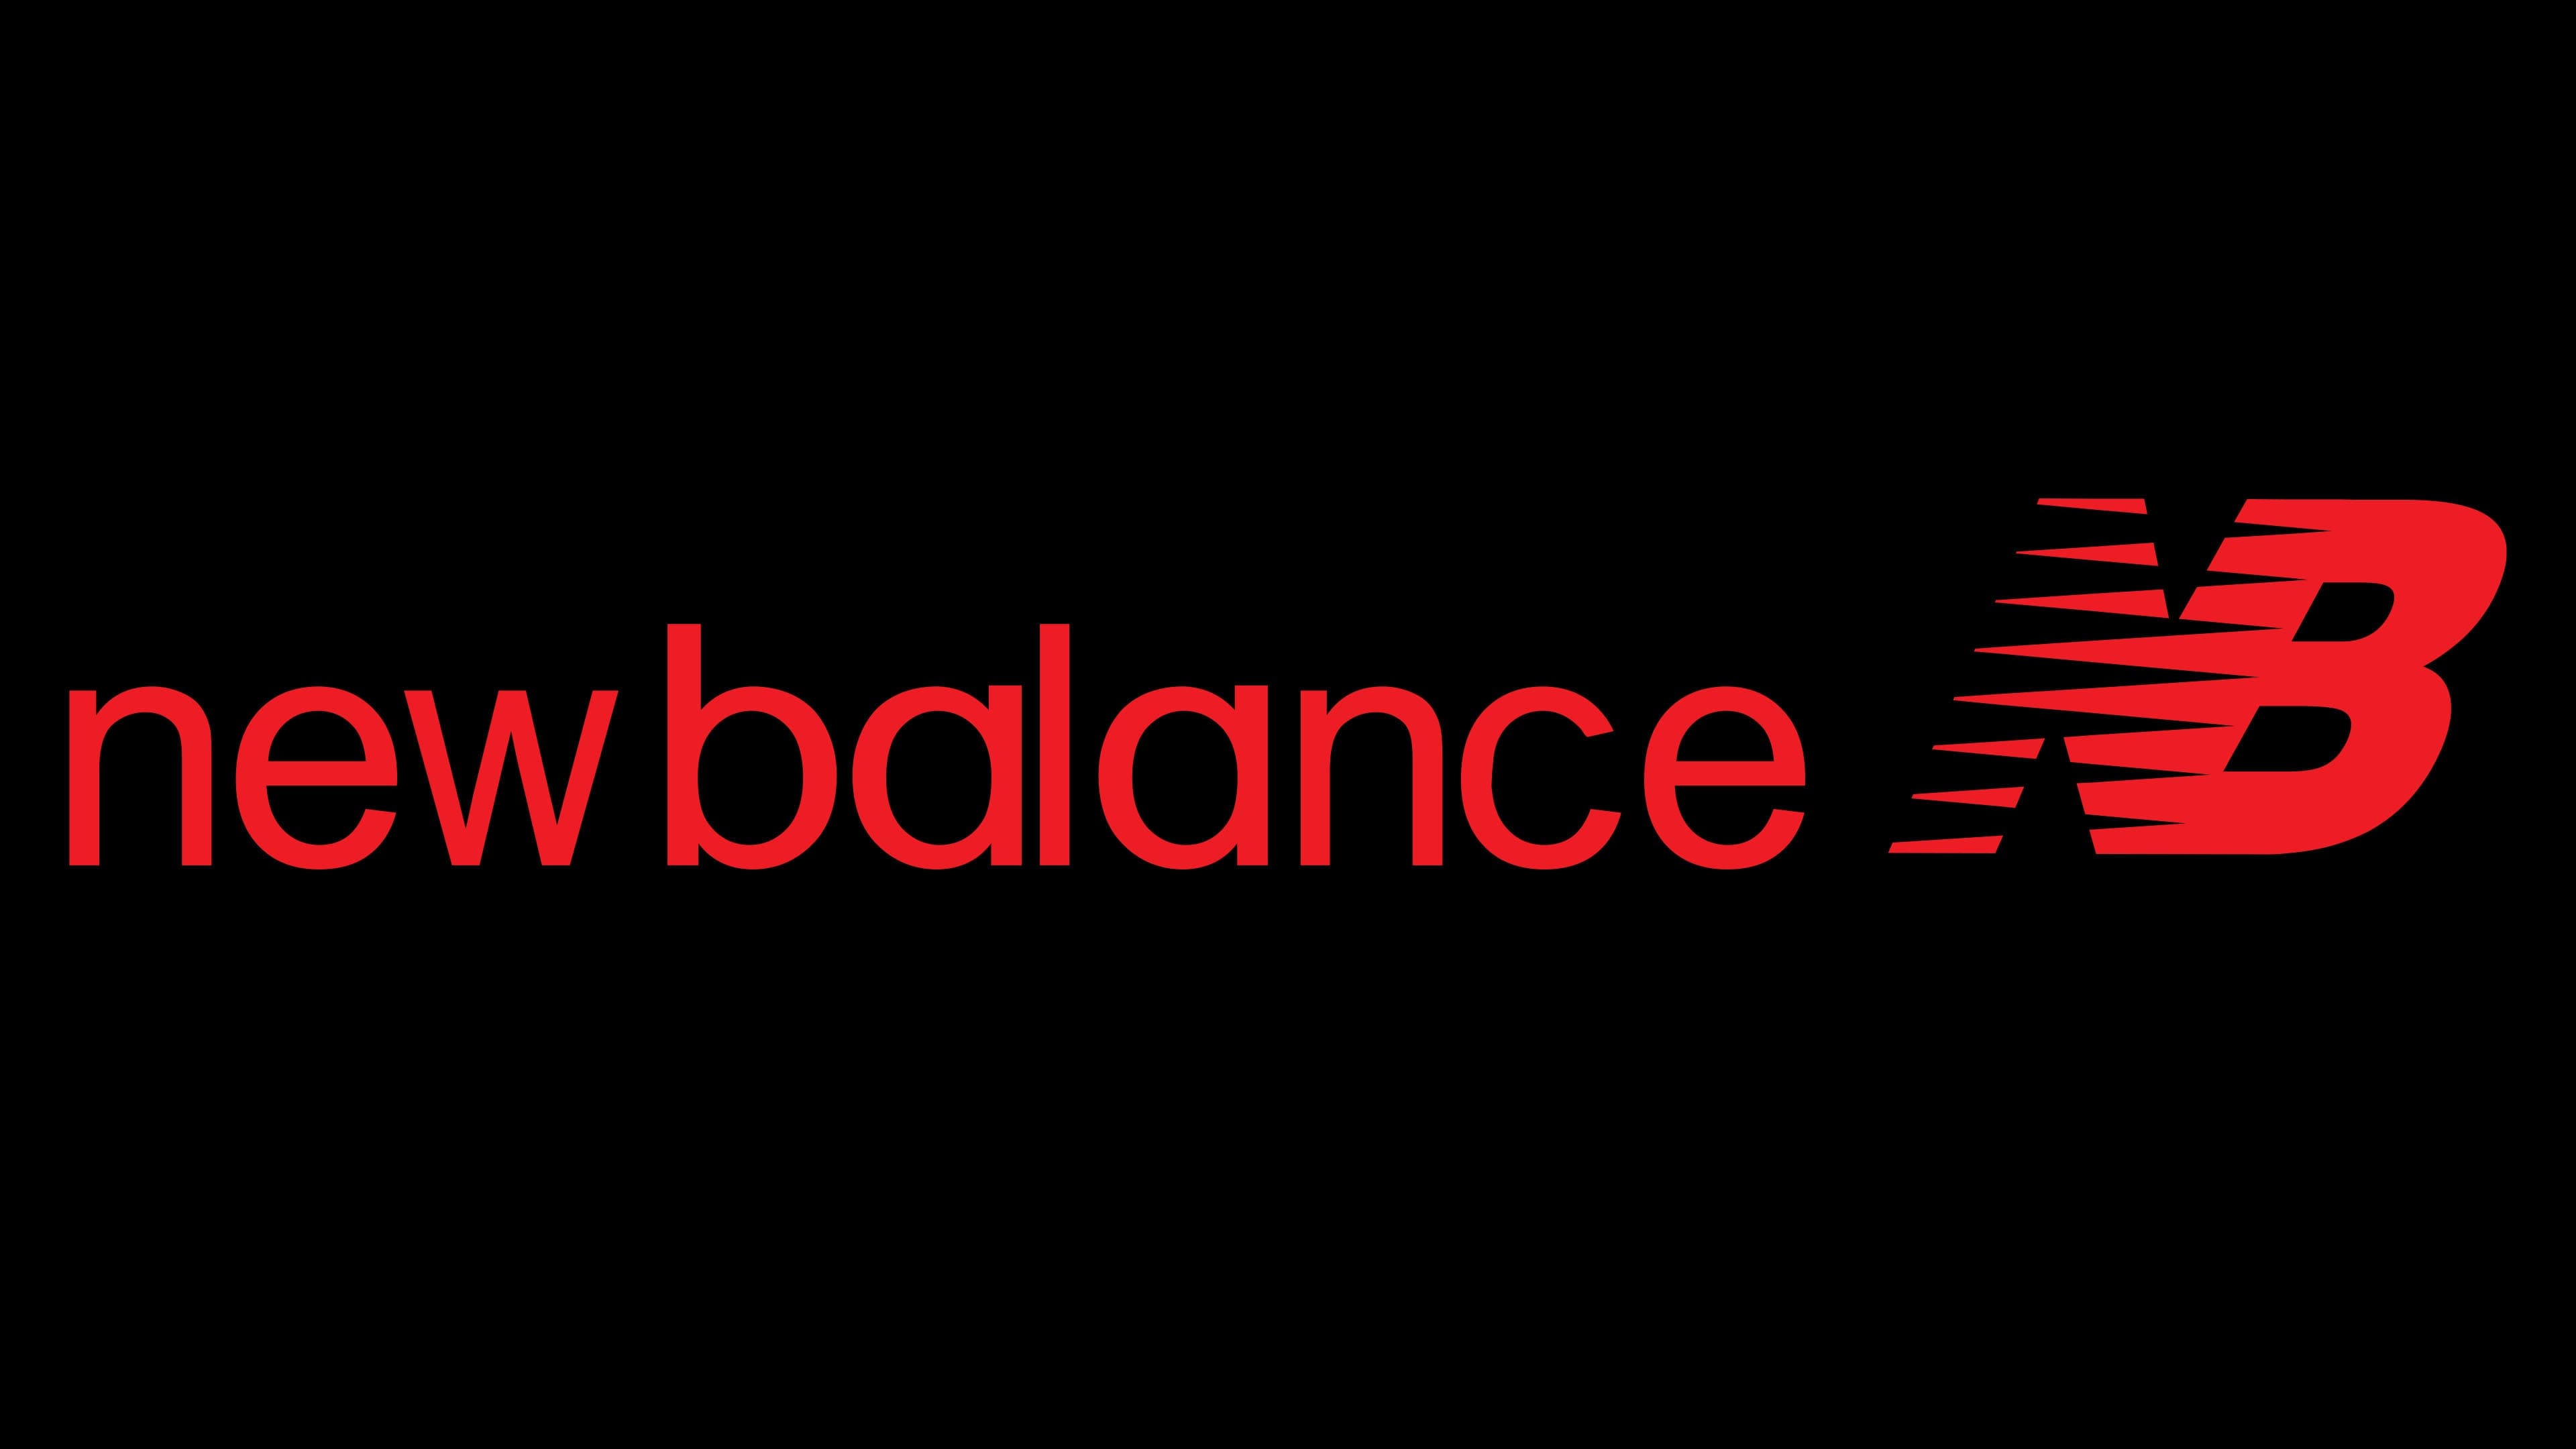 new balance new logo